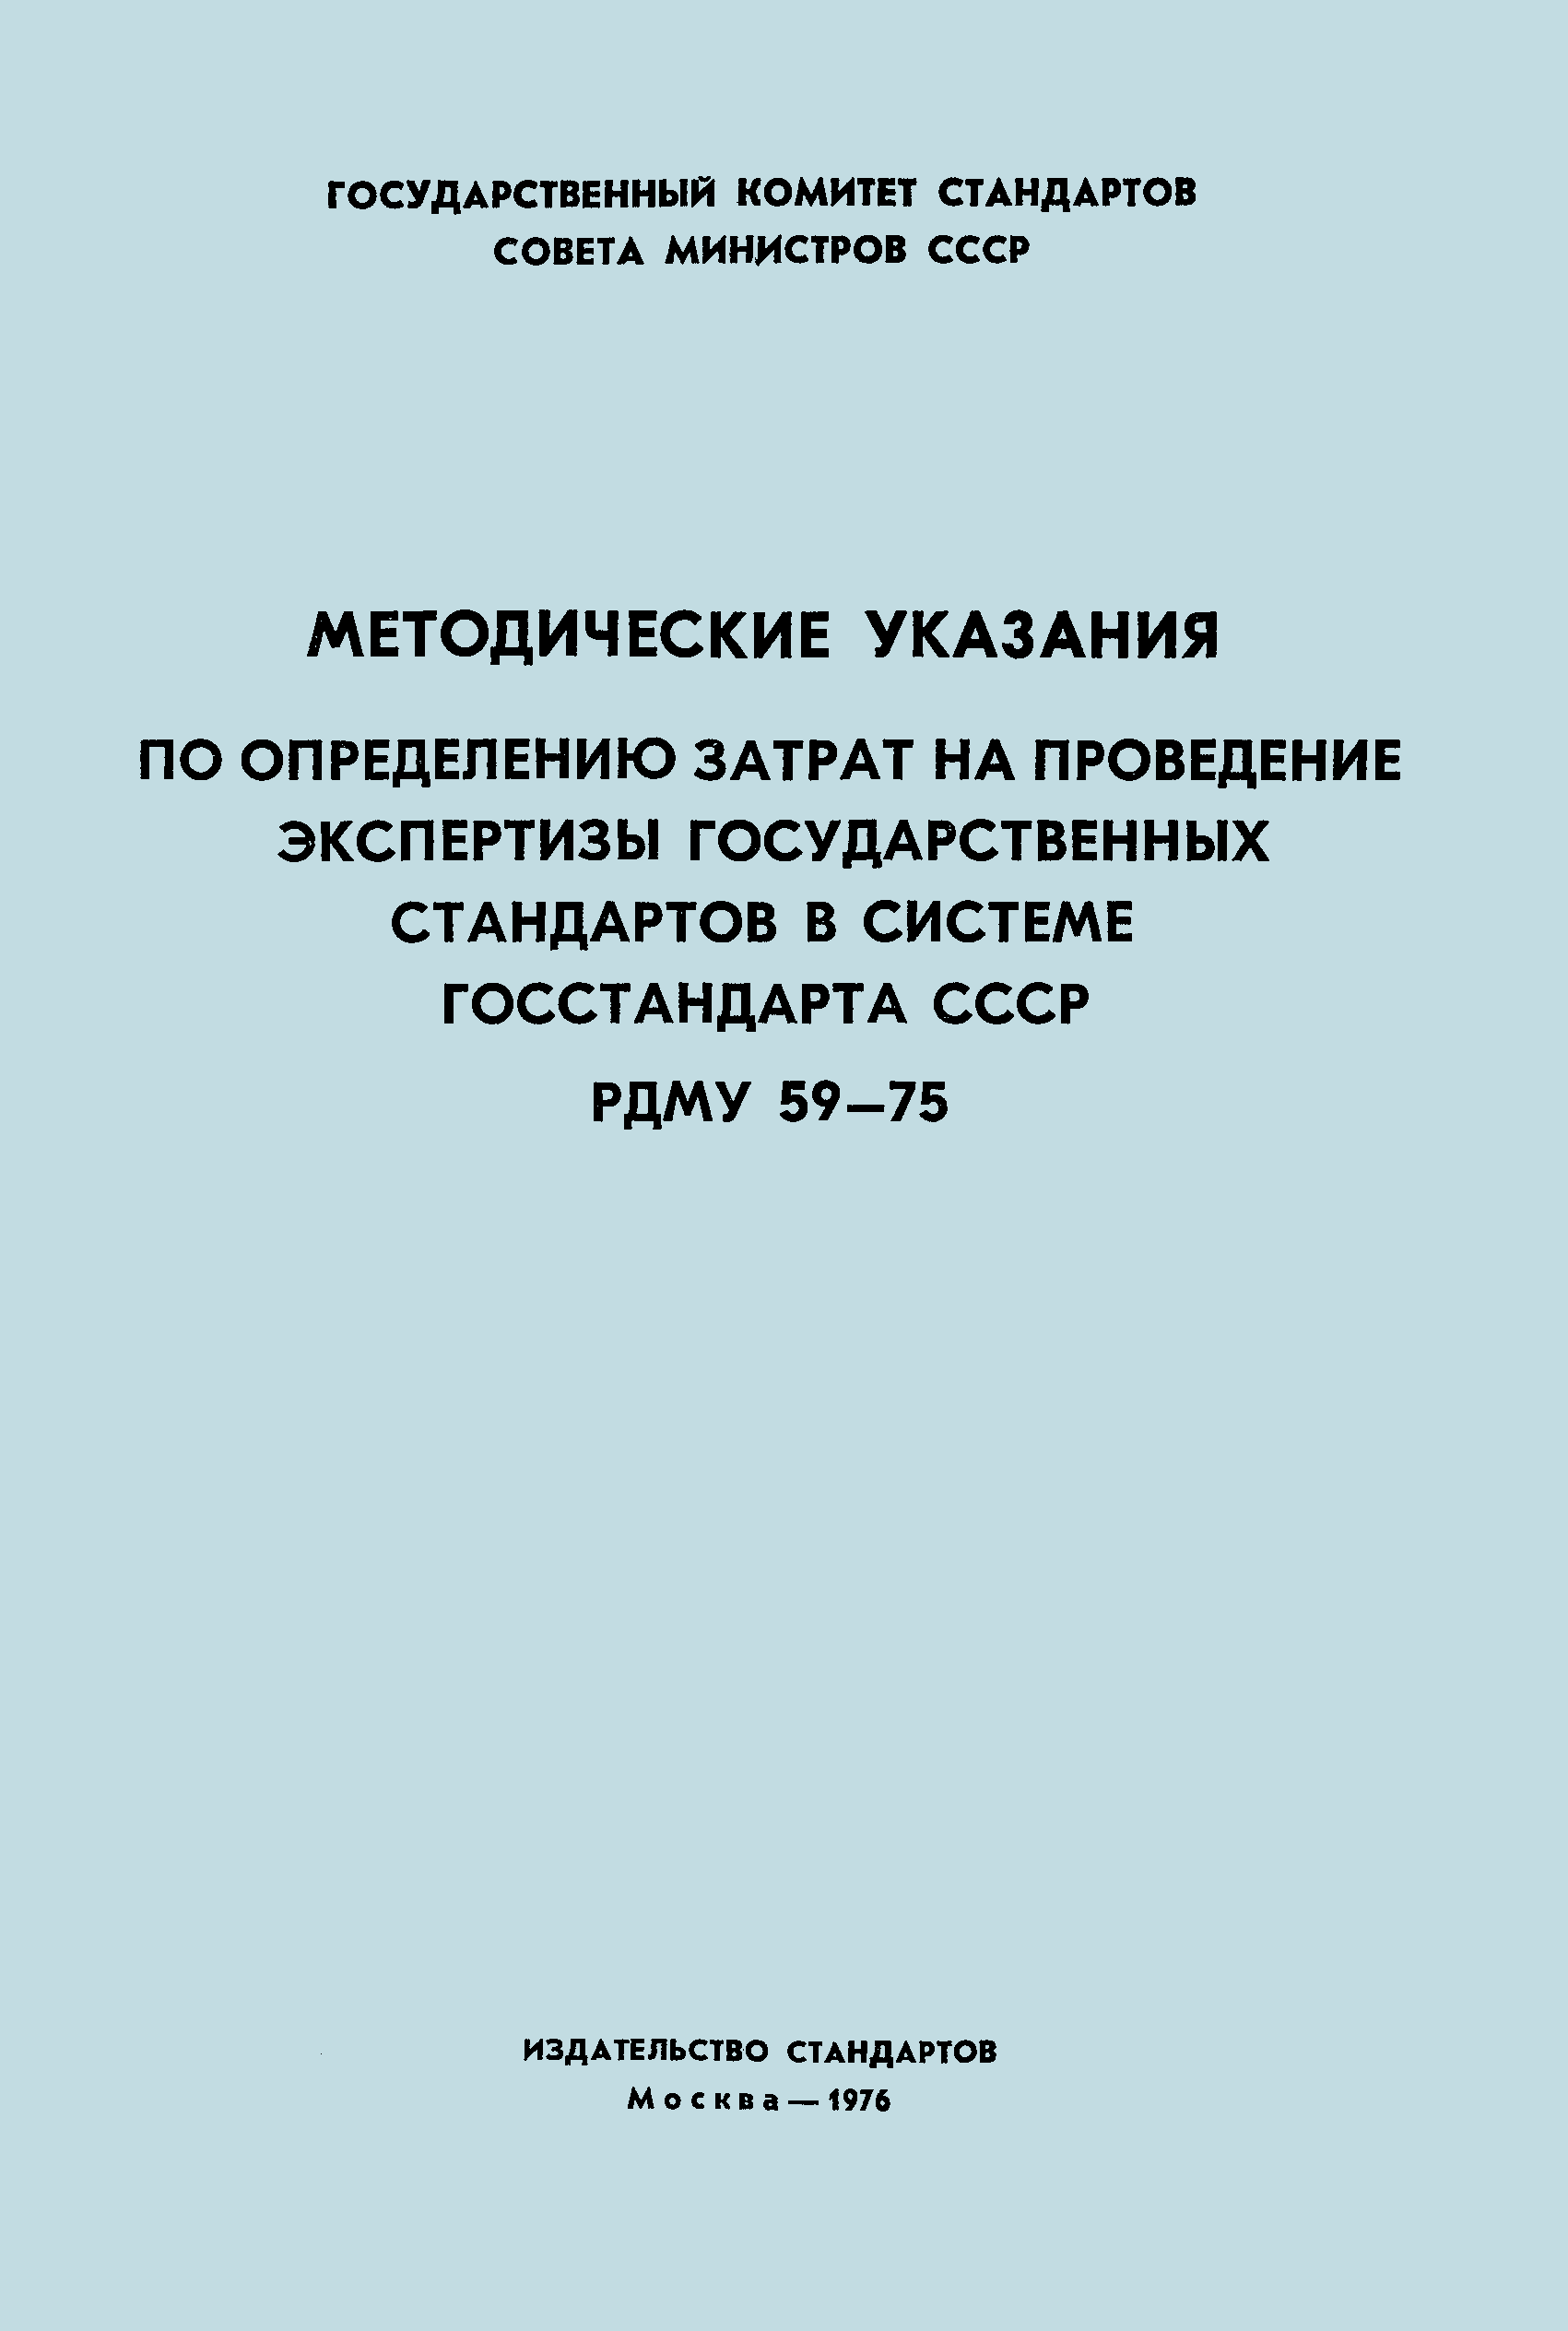 РДМУ 59-75